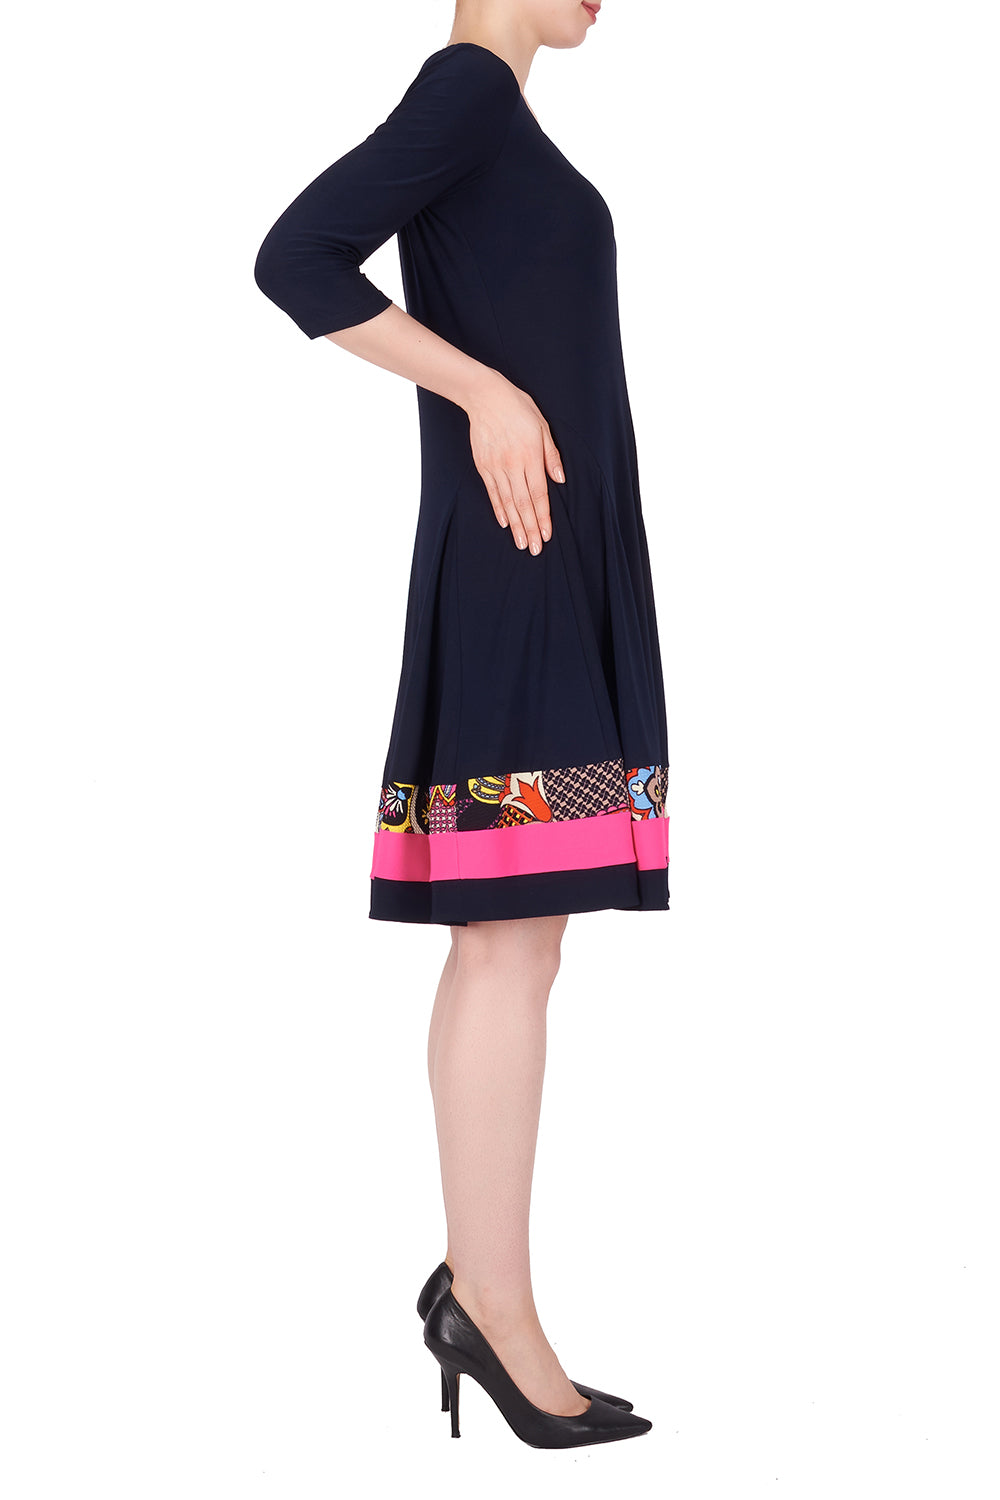 Joseph Ribkoff Midnight Blue-Multi Dress Style 191660